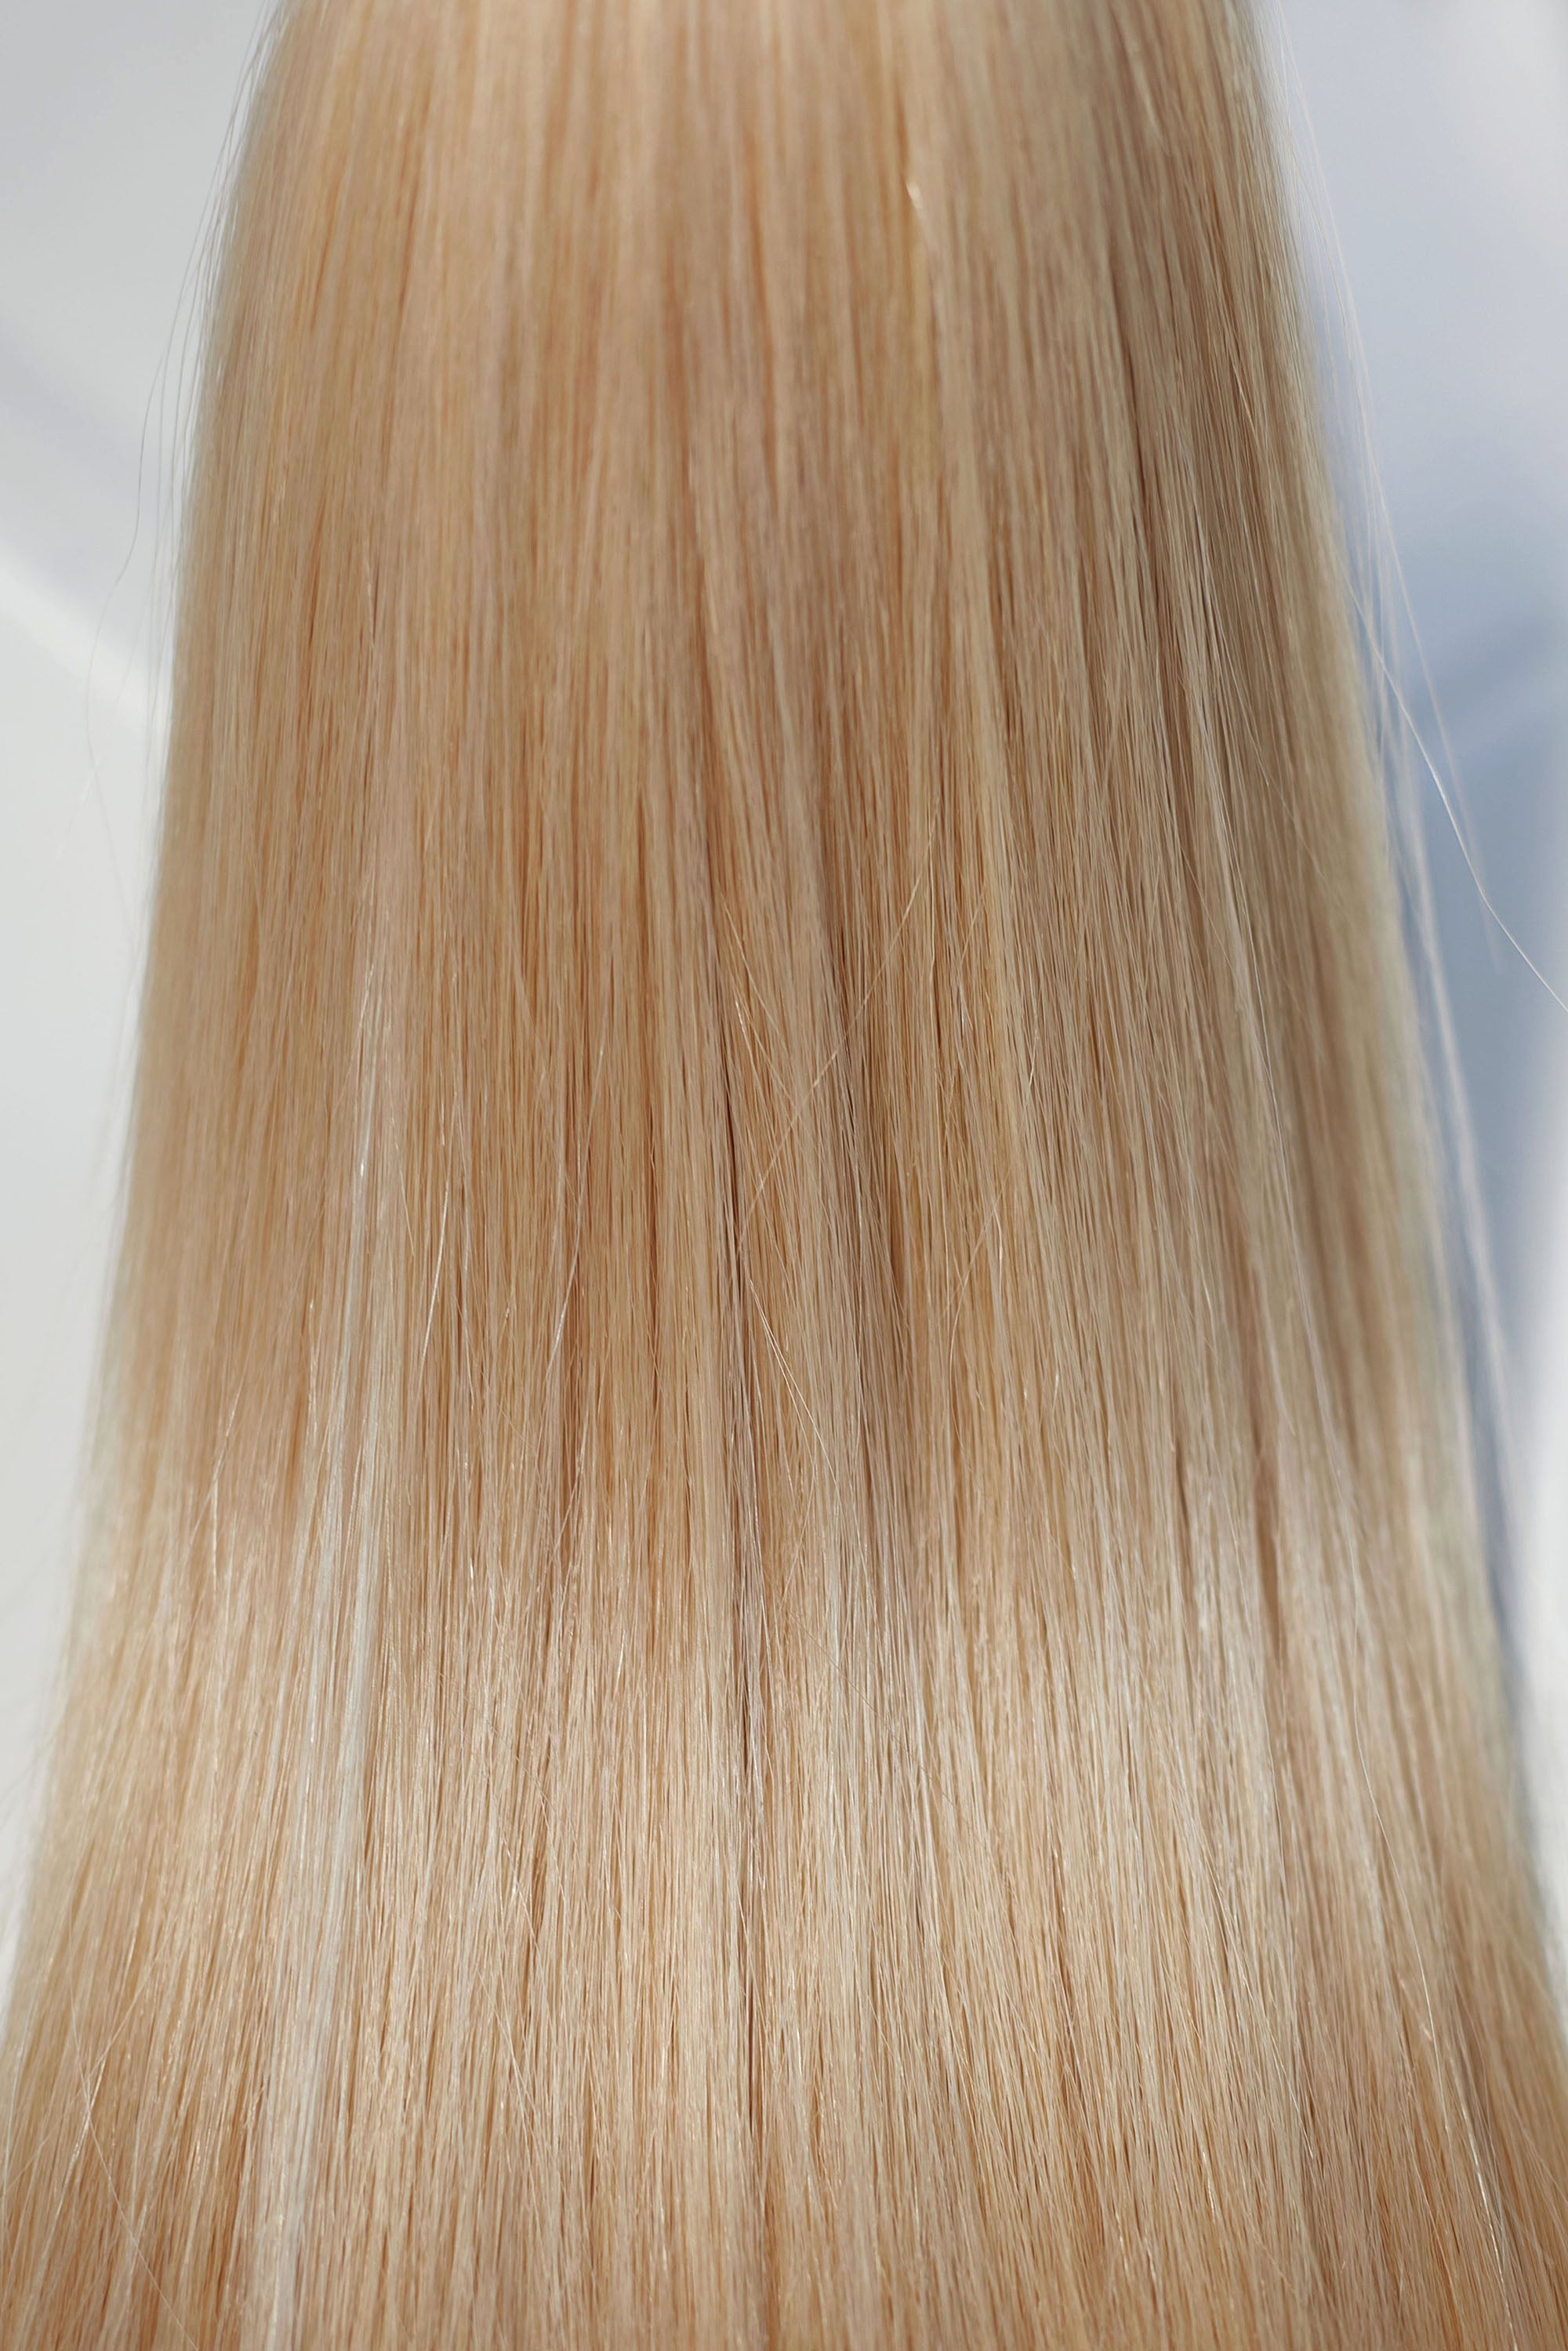 Behair professional Keratin Tip "Premium" 20" (50cm) Natural Straight Light Gold Blond #24 - 25g (Micro - 0.5g each pcs) hair extensions